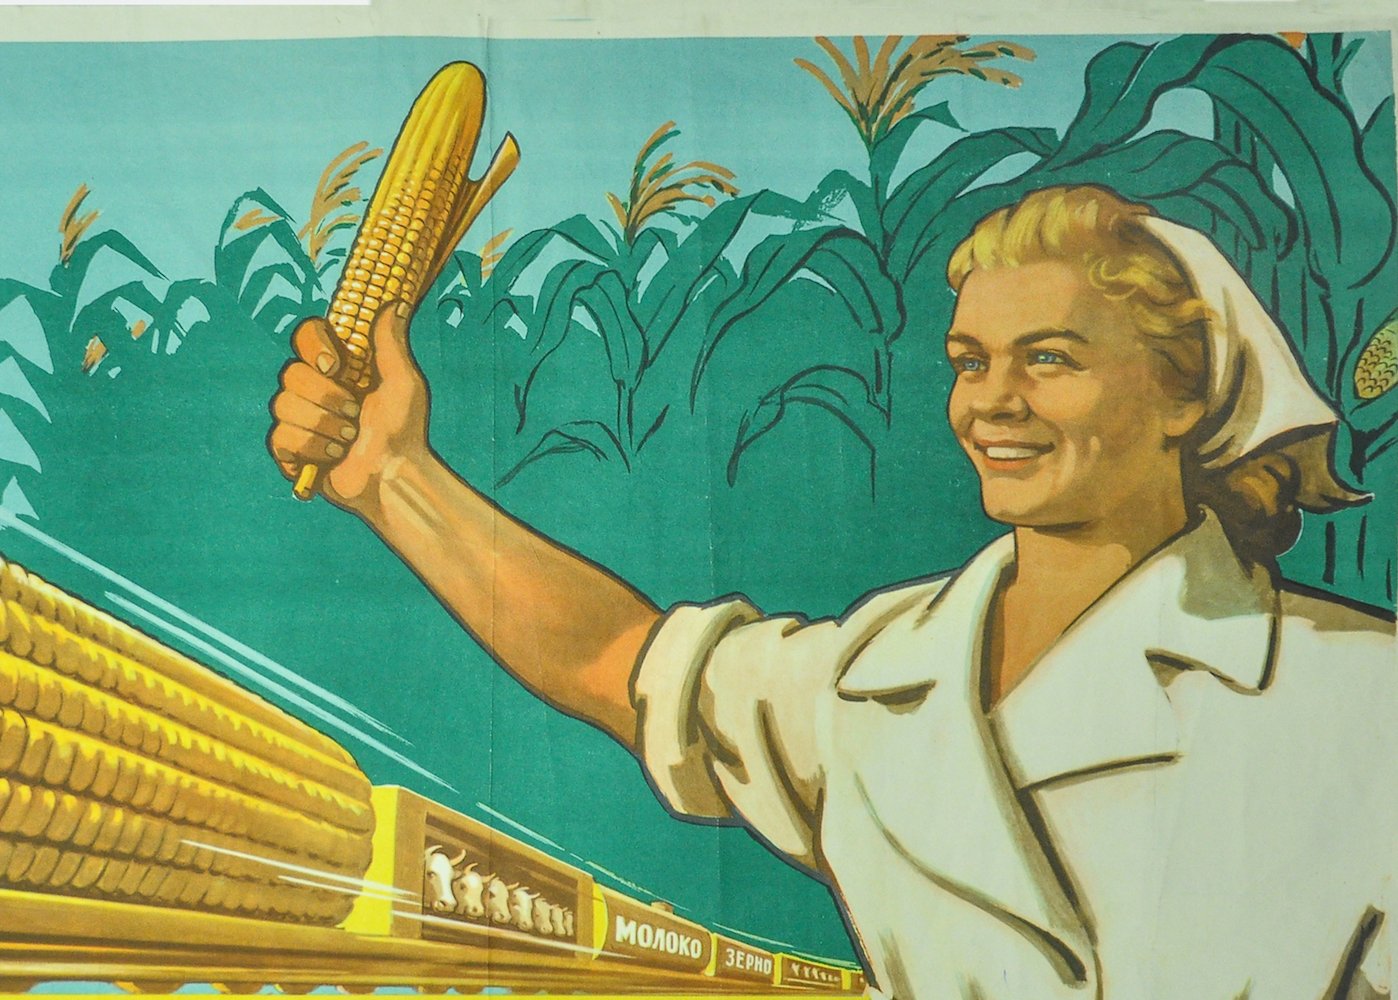 Worker, mother, athlete: women in Soviet propaganda posters  